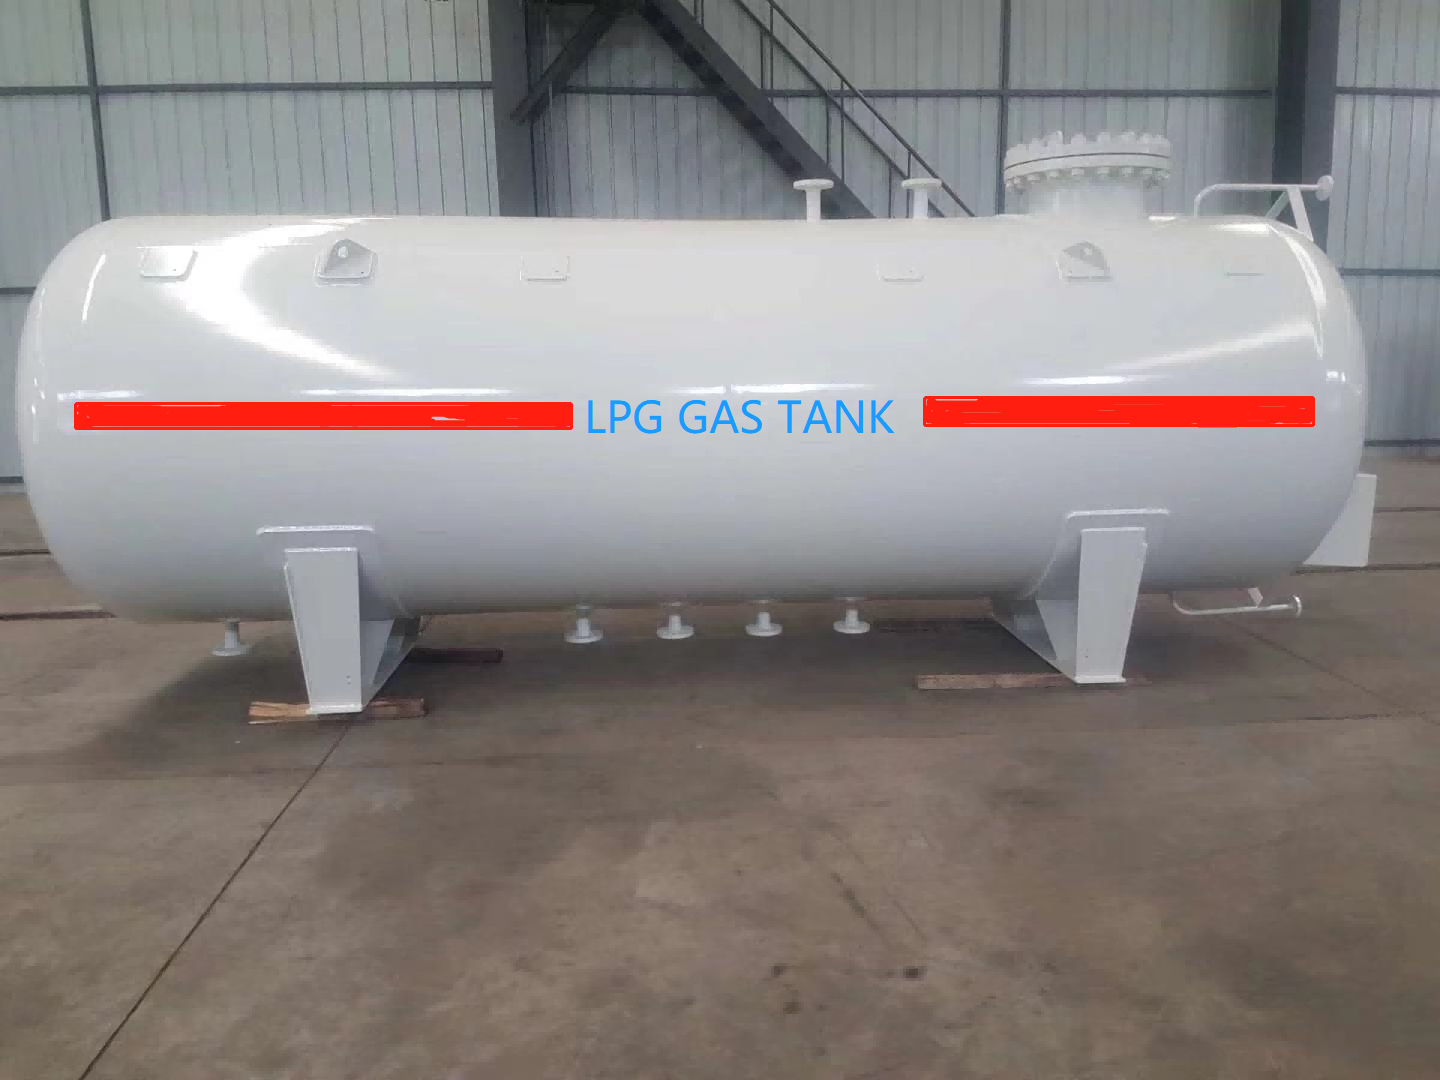 Radiographic inspection of LPG storage tanks